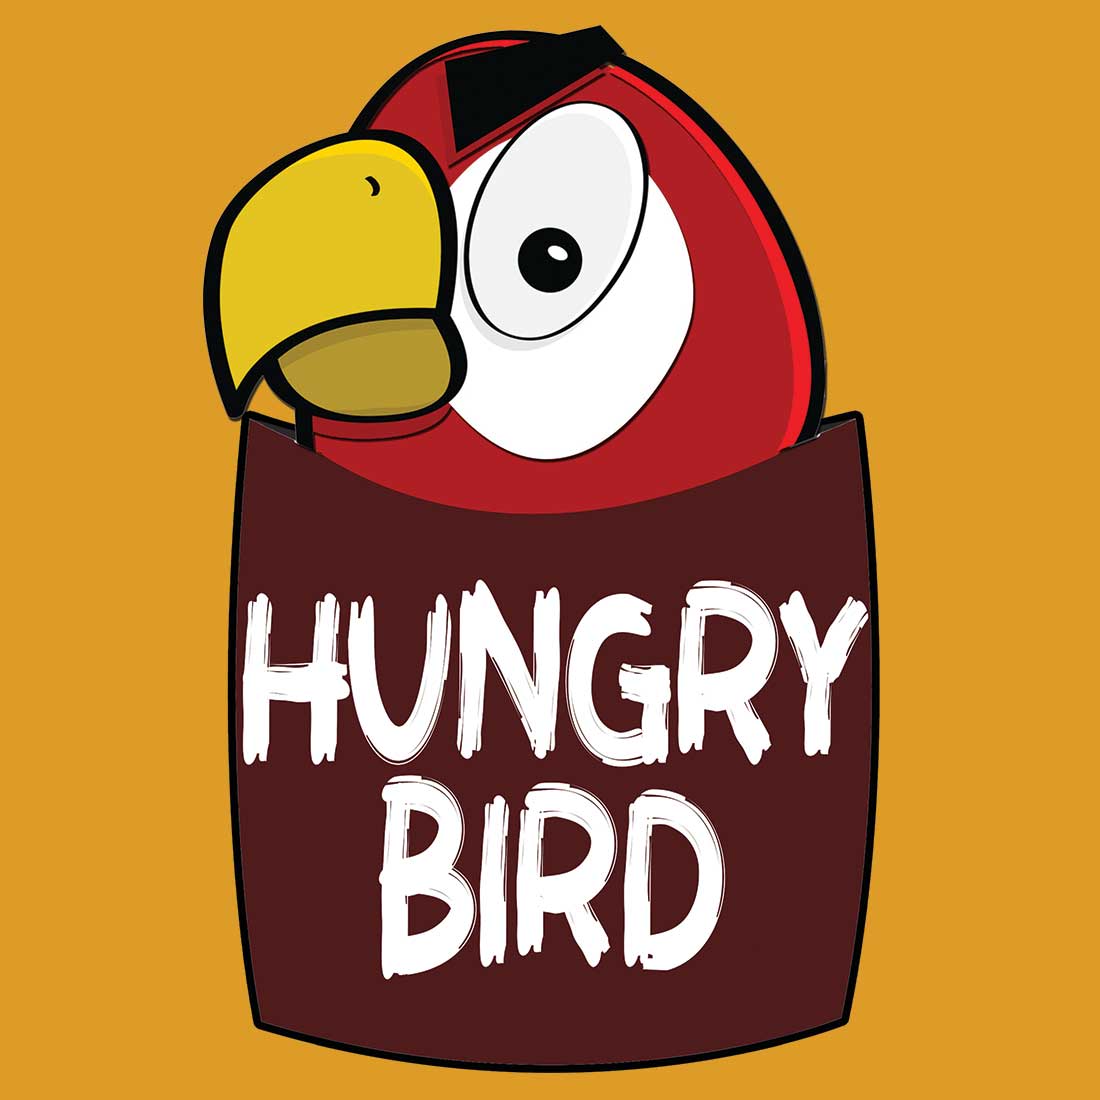 Hungry Bird  Mustrad Men T-Shirt